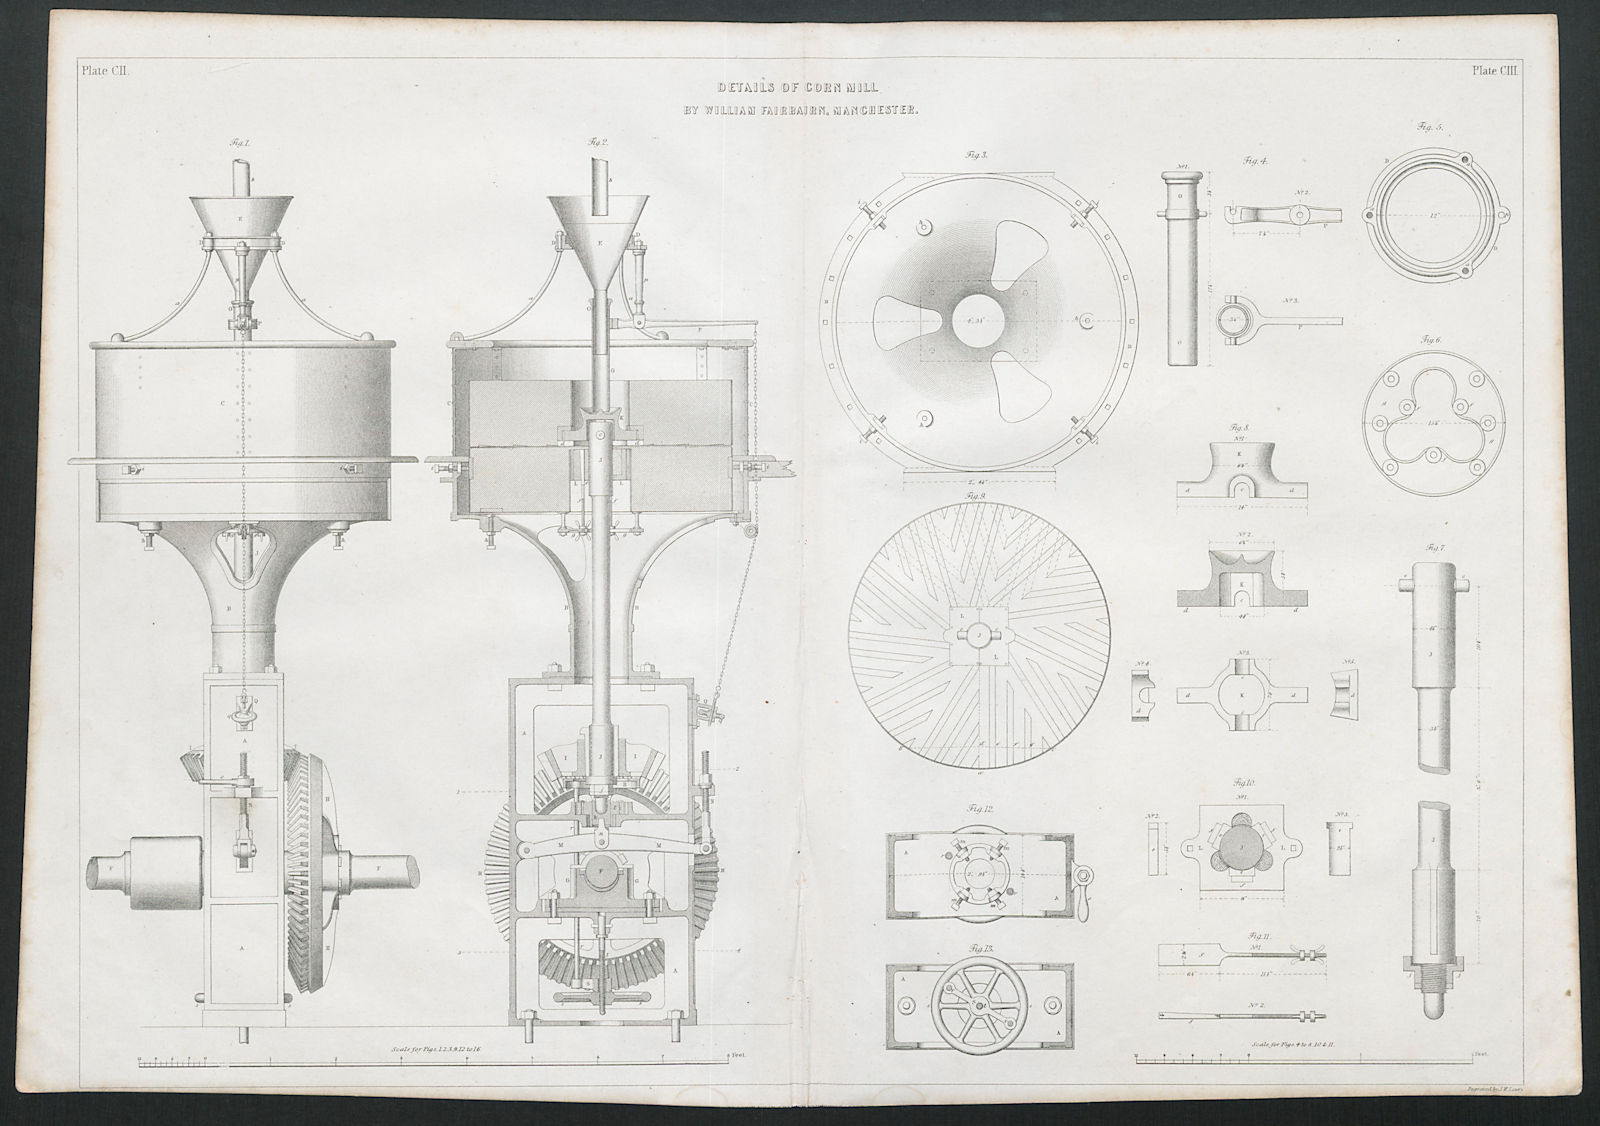 19C ENGINEERING DRAWING Details of corn mill. William Fairbairn, Manchester 1847